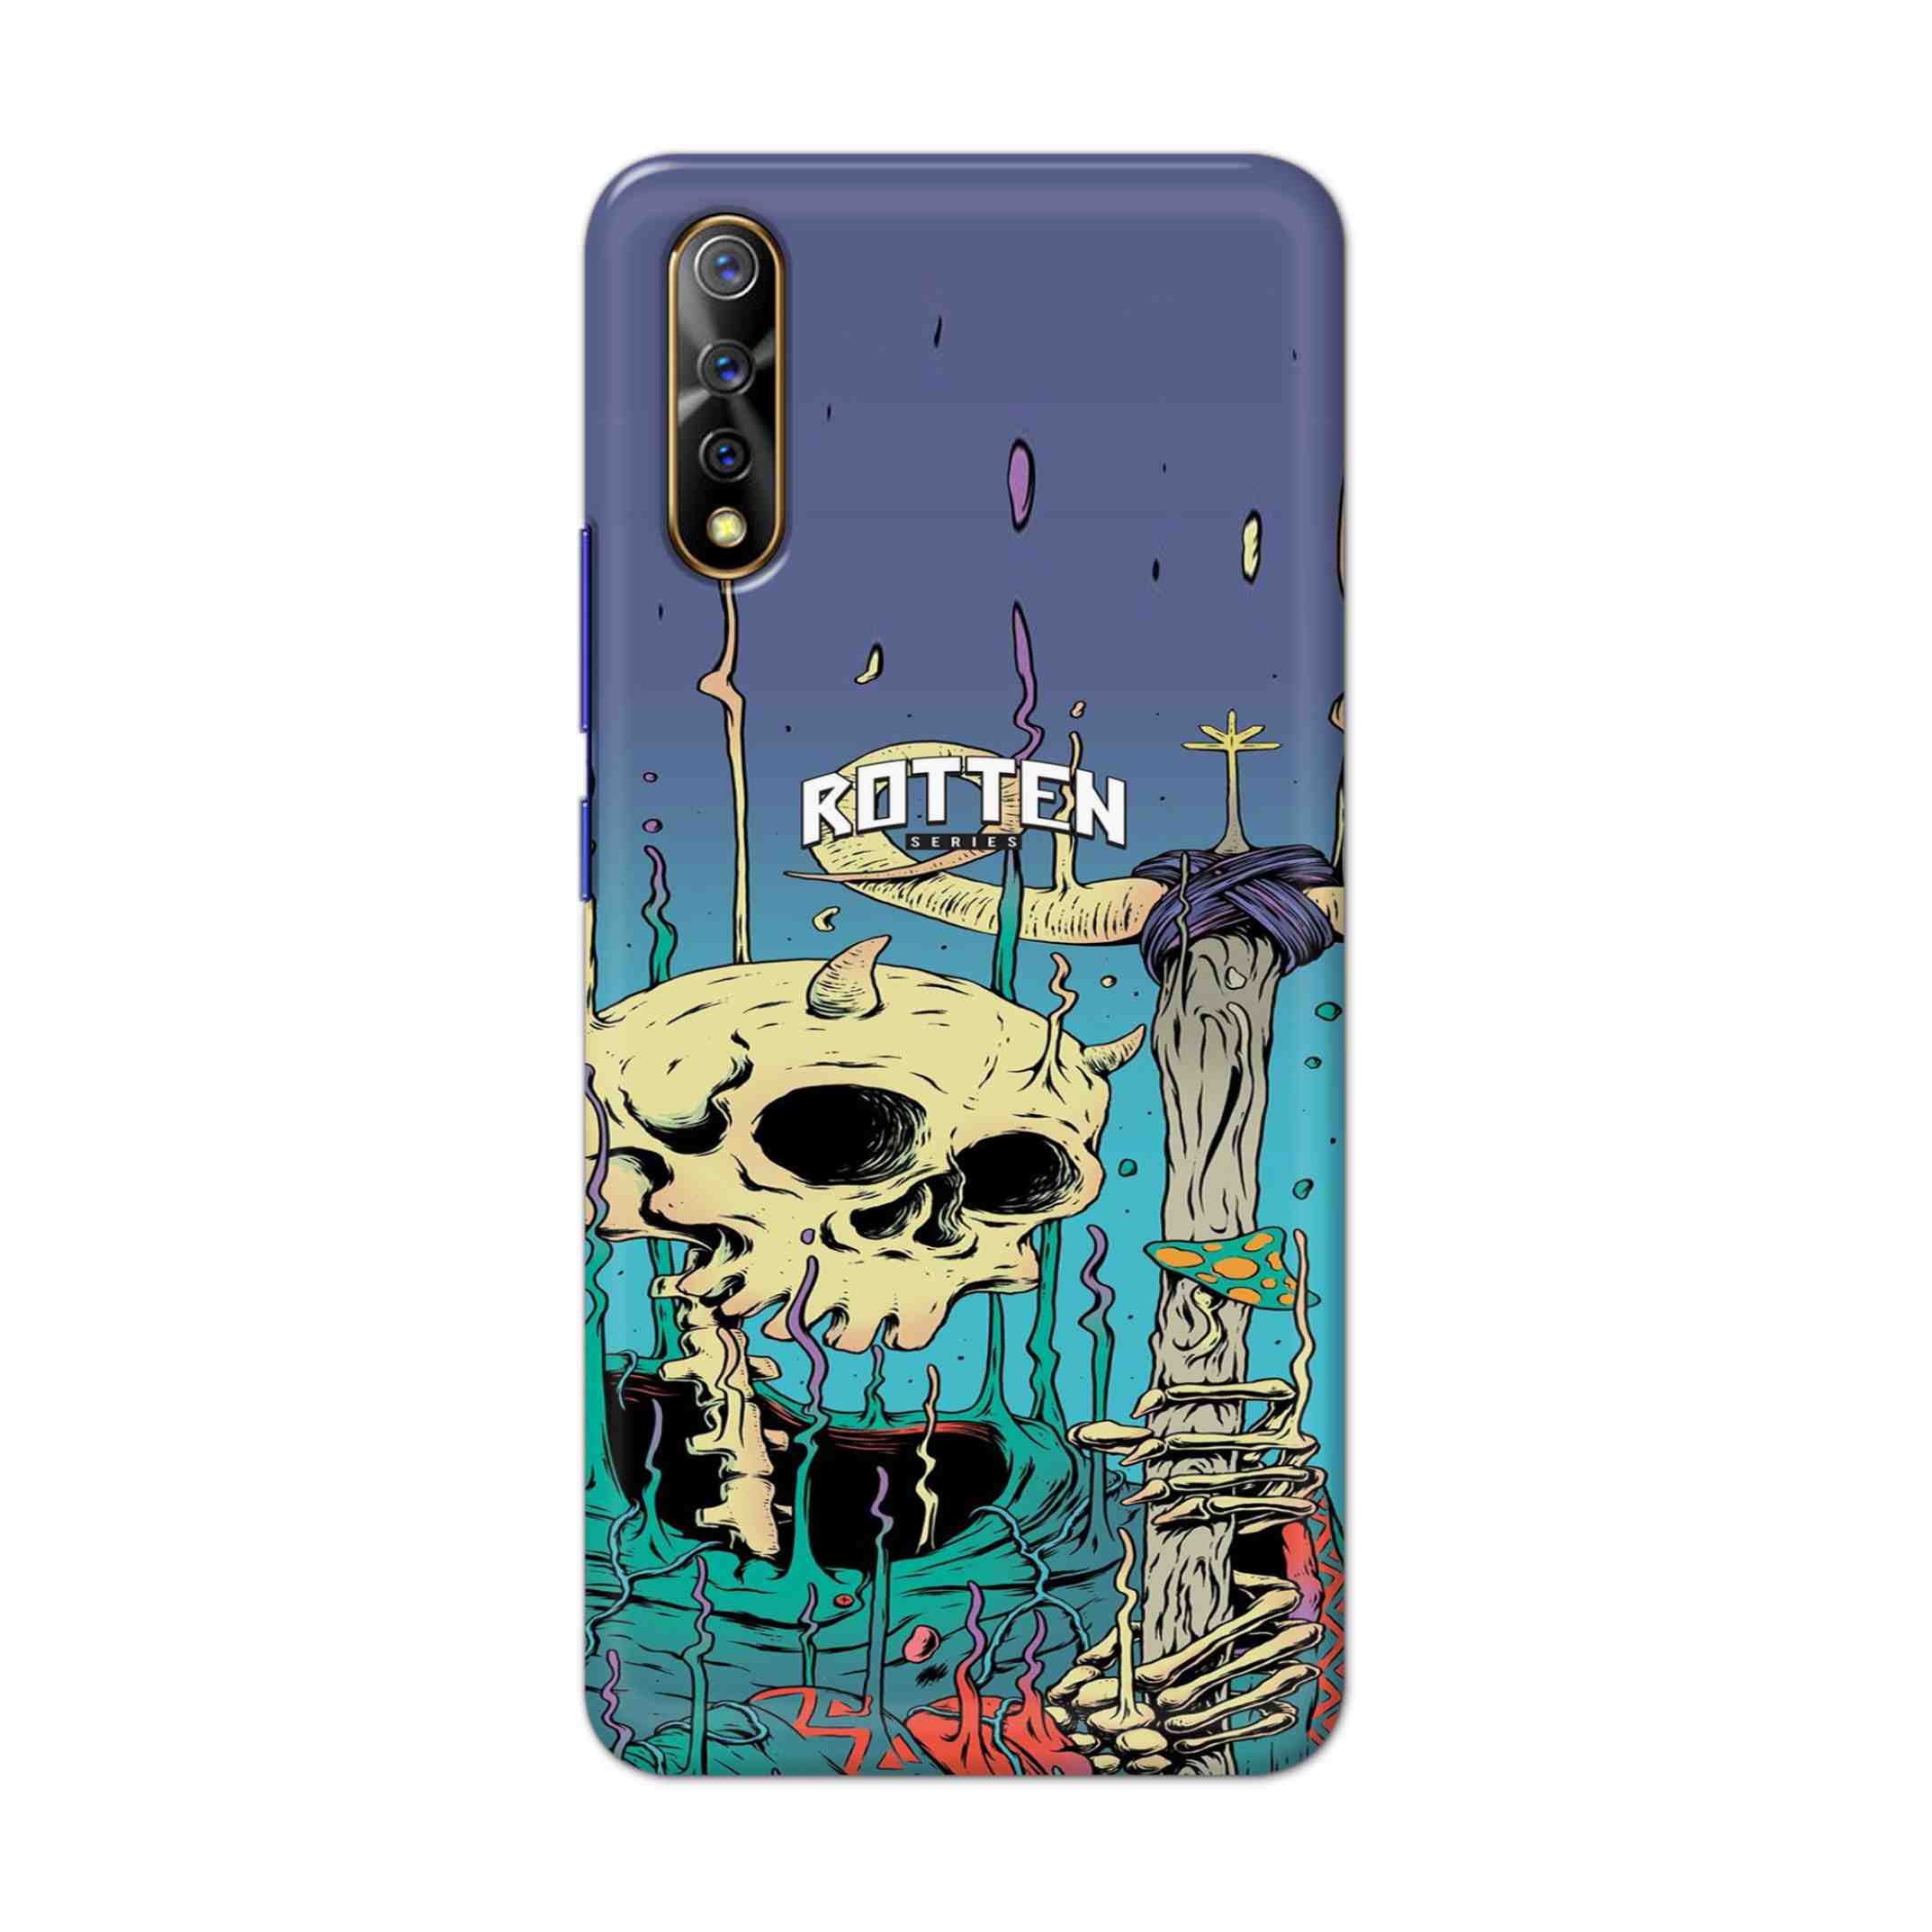 Buy Skull Hard Back Mobile Phone Case Cover For Vivo S1 / Z1x Online